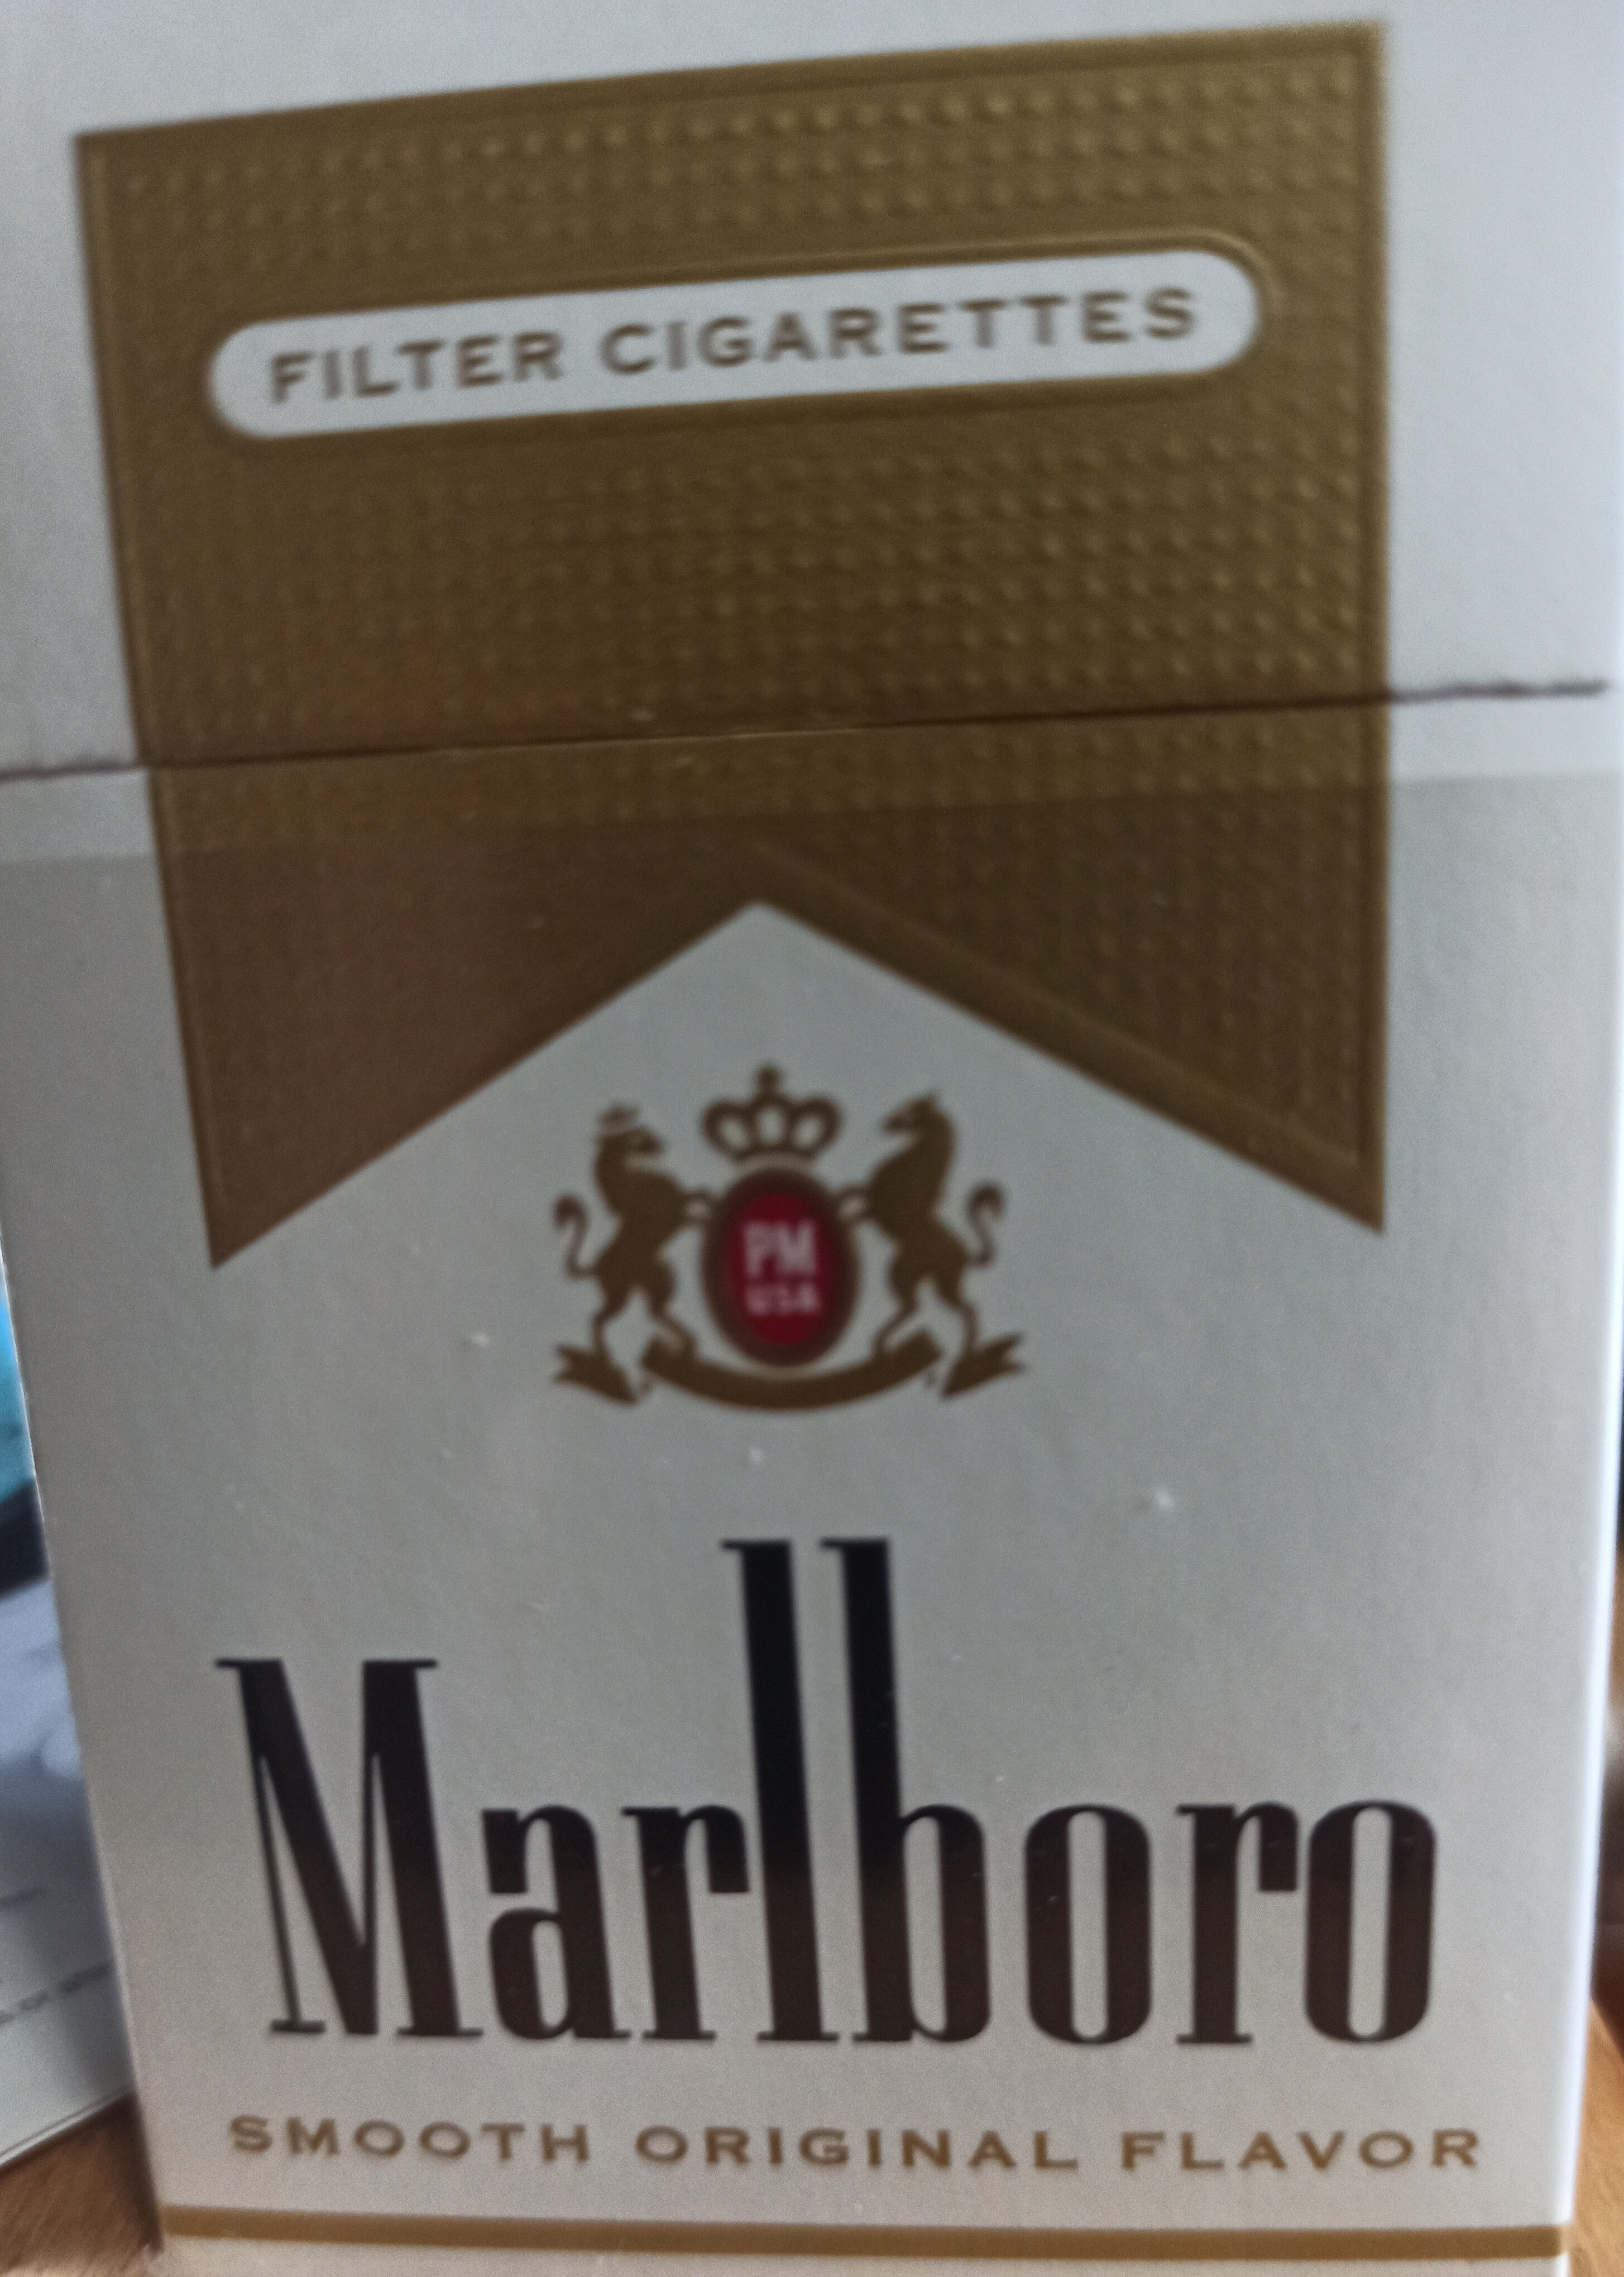 Malboro cigarette gold pack - Product - en